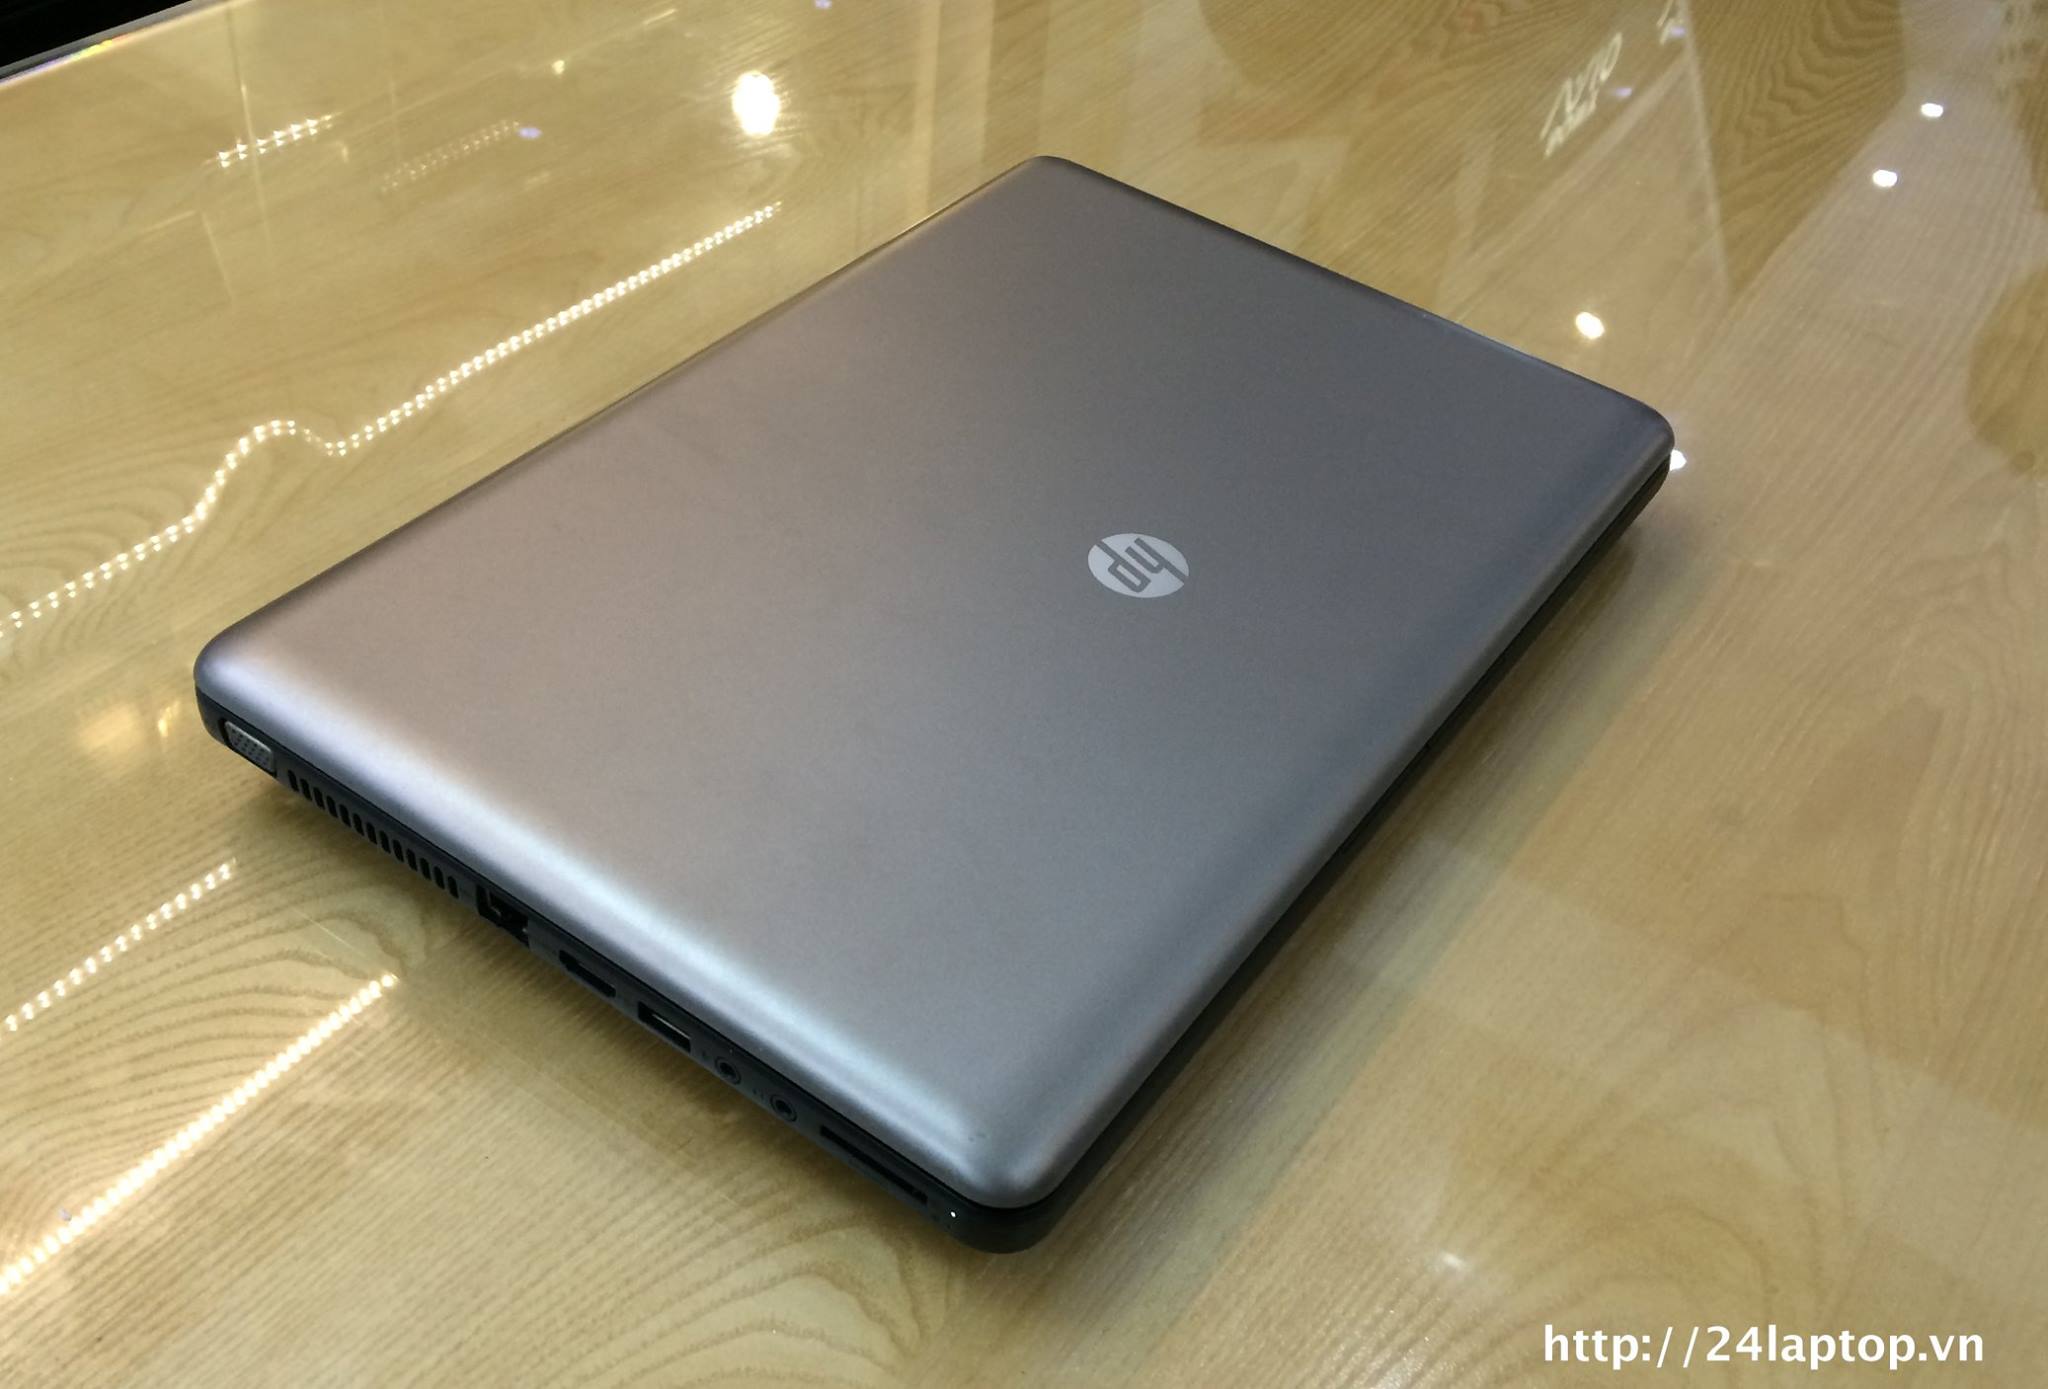 Laptop HP 430 i3 cu.jpg